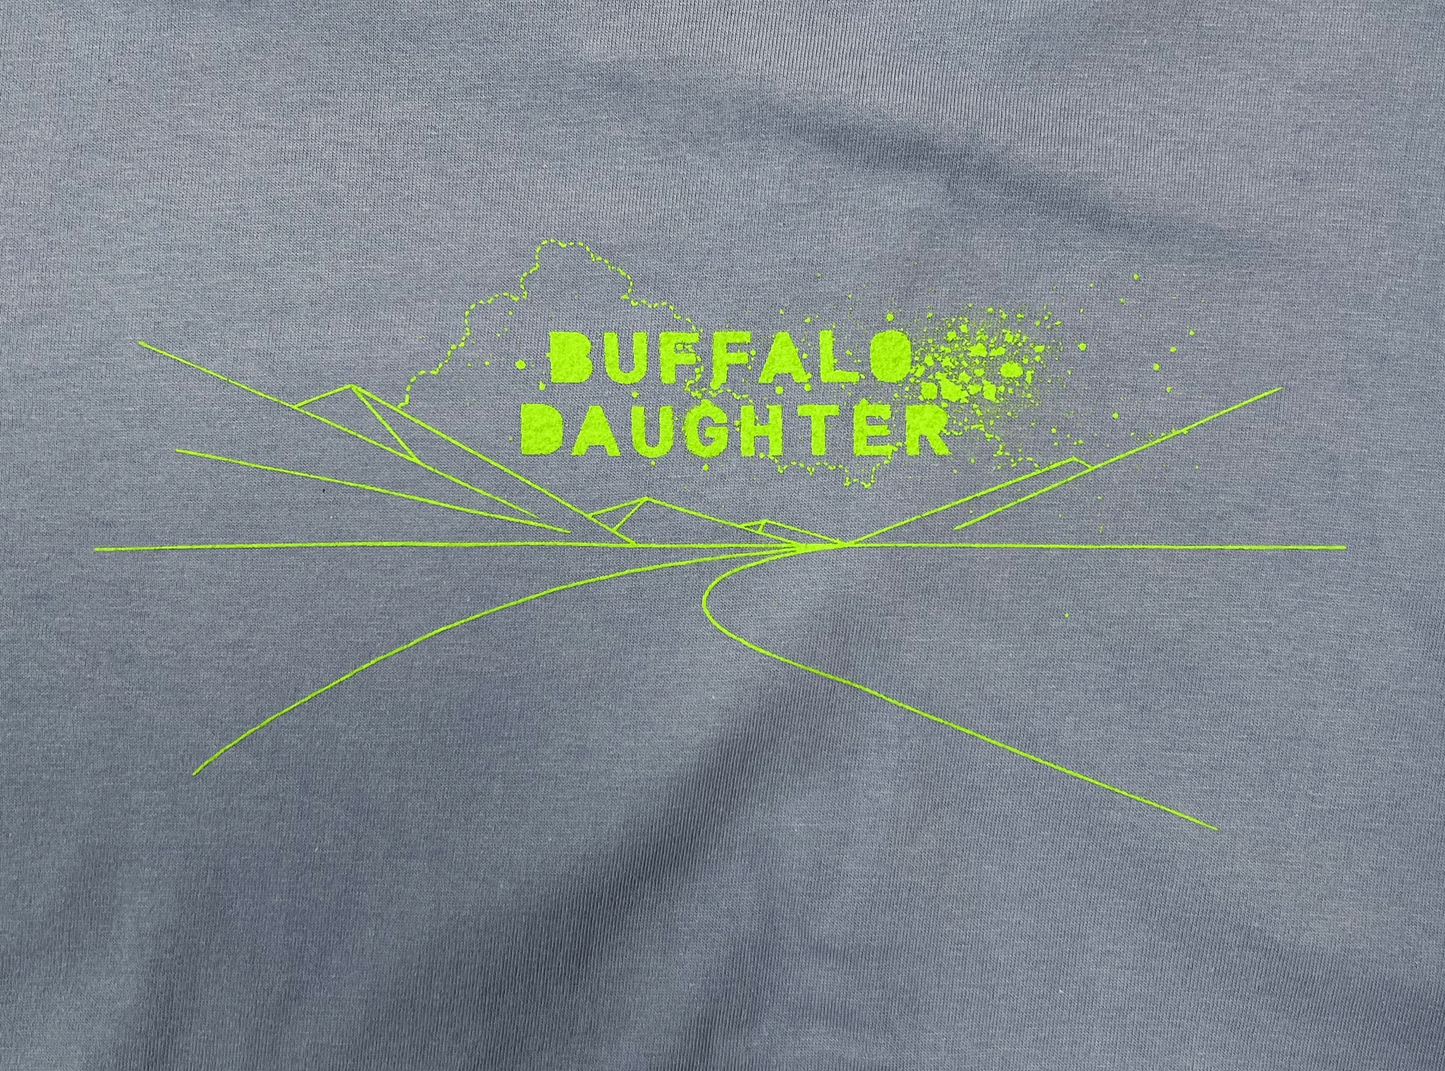 Buffallo Daughter 「New Rock 25周年記念」 Tシャツ（art work by Keiji Ito）